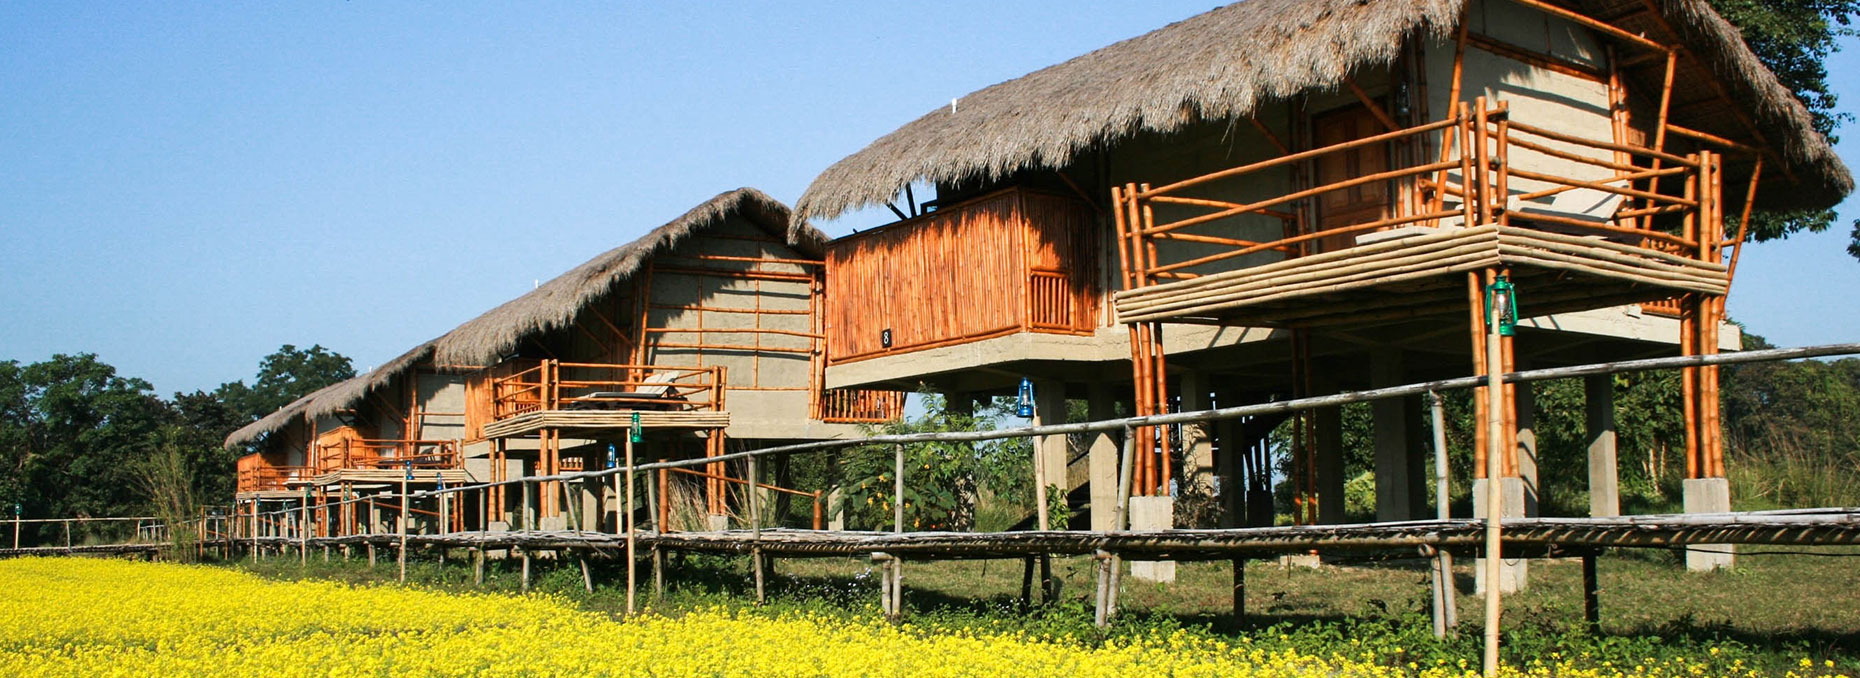 Diphlu River Lodge, Kaziranga 